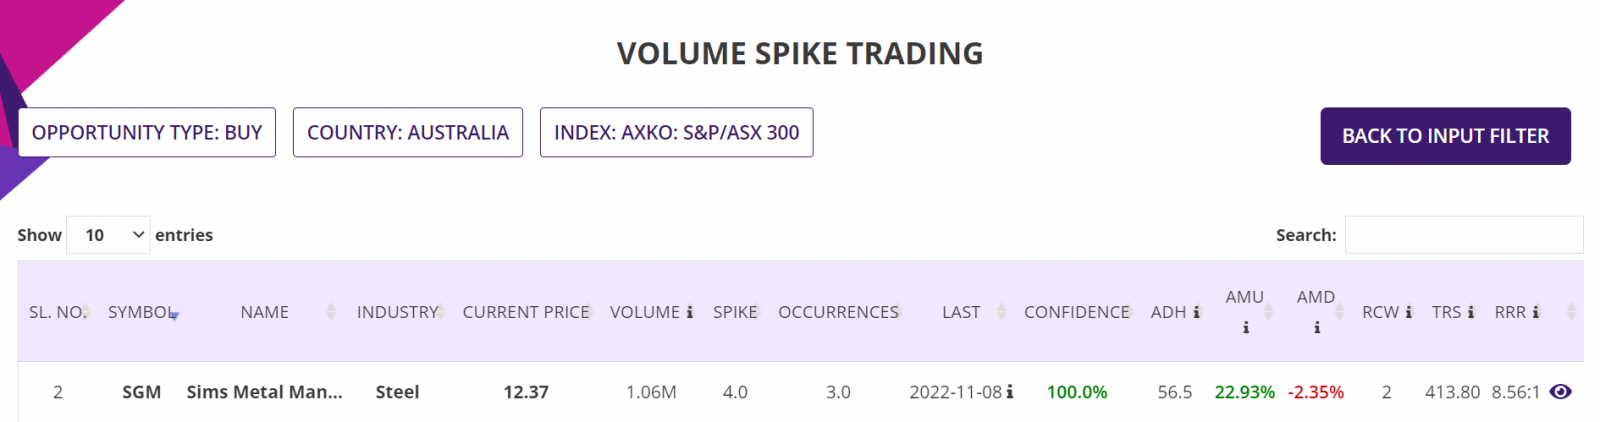 Volume spike trading strategy, summary report, ASX Stocks